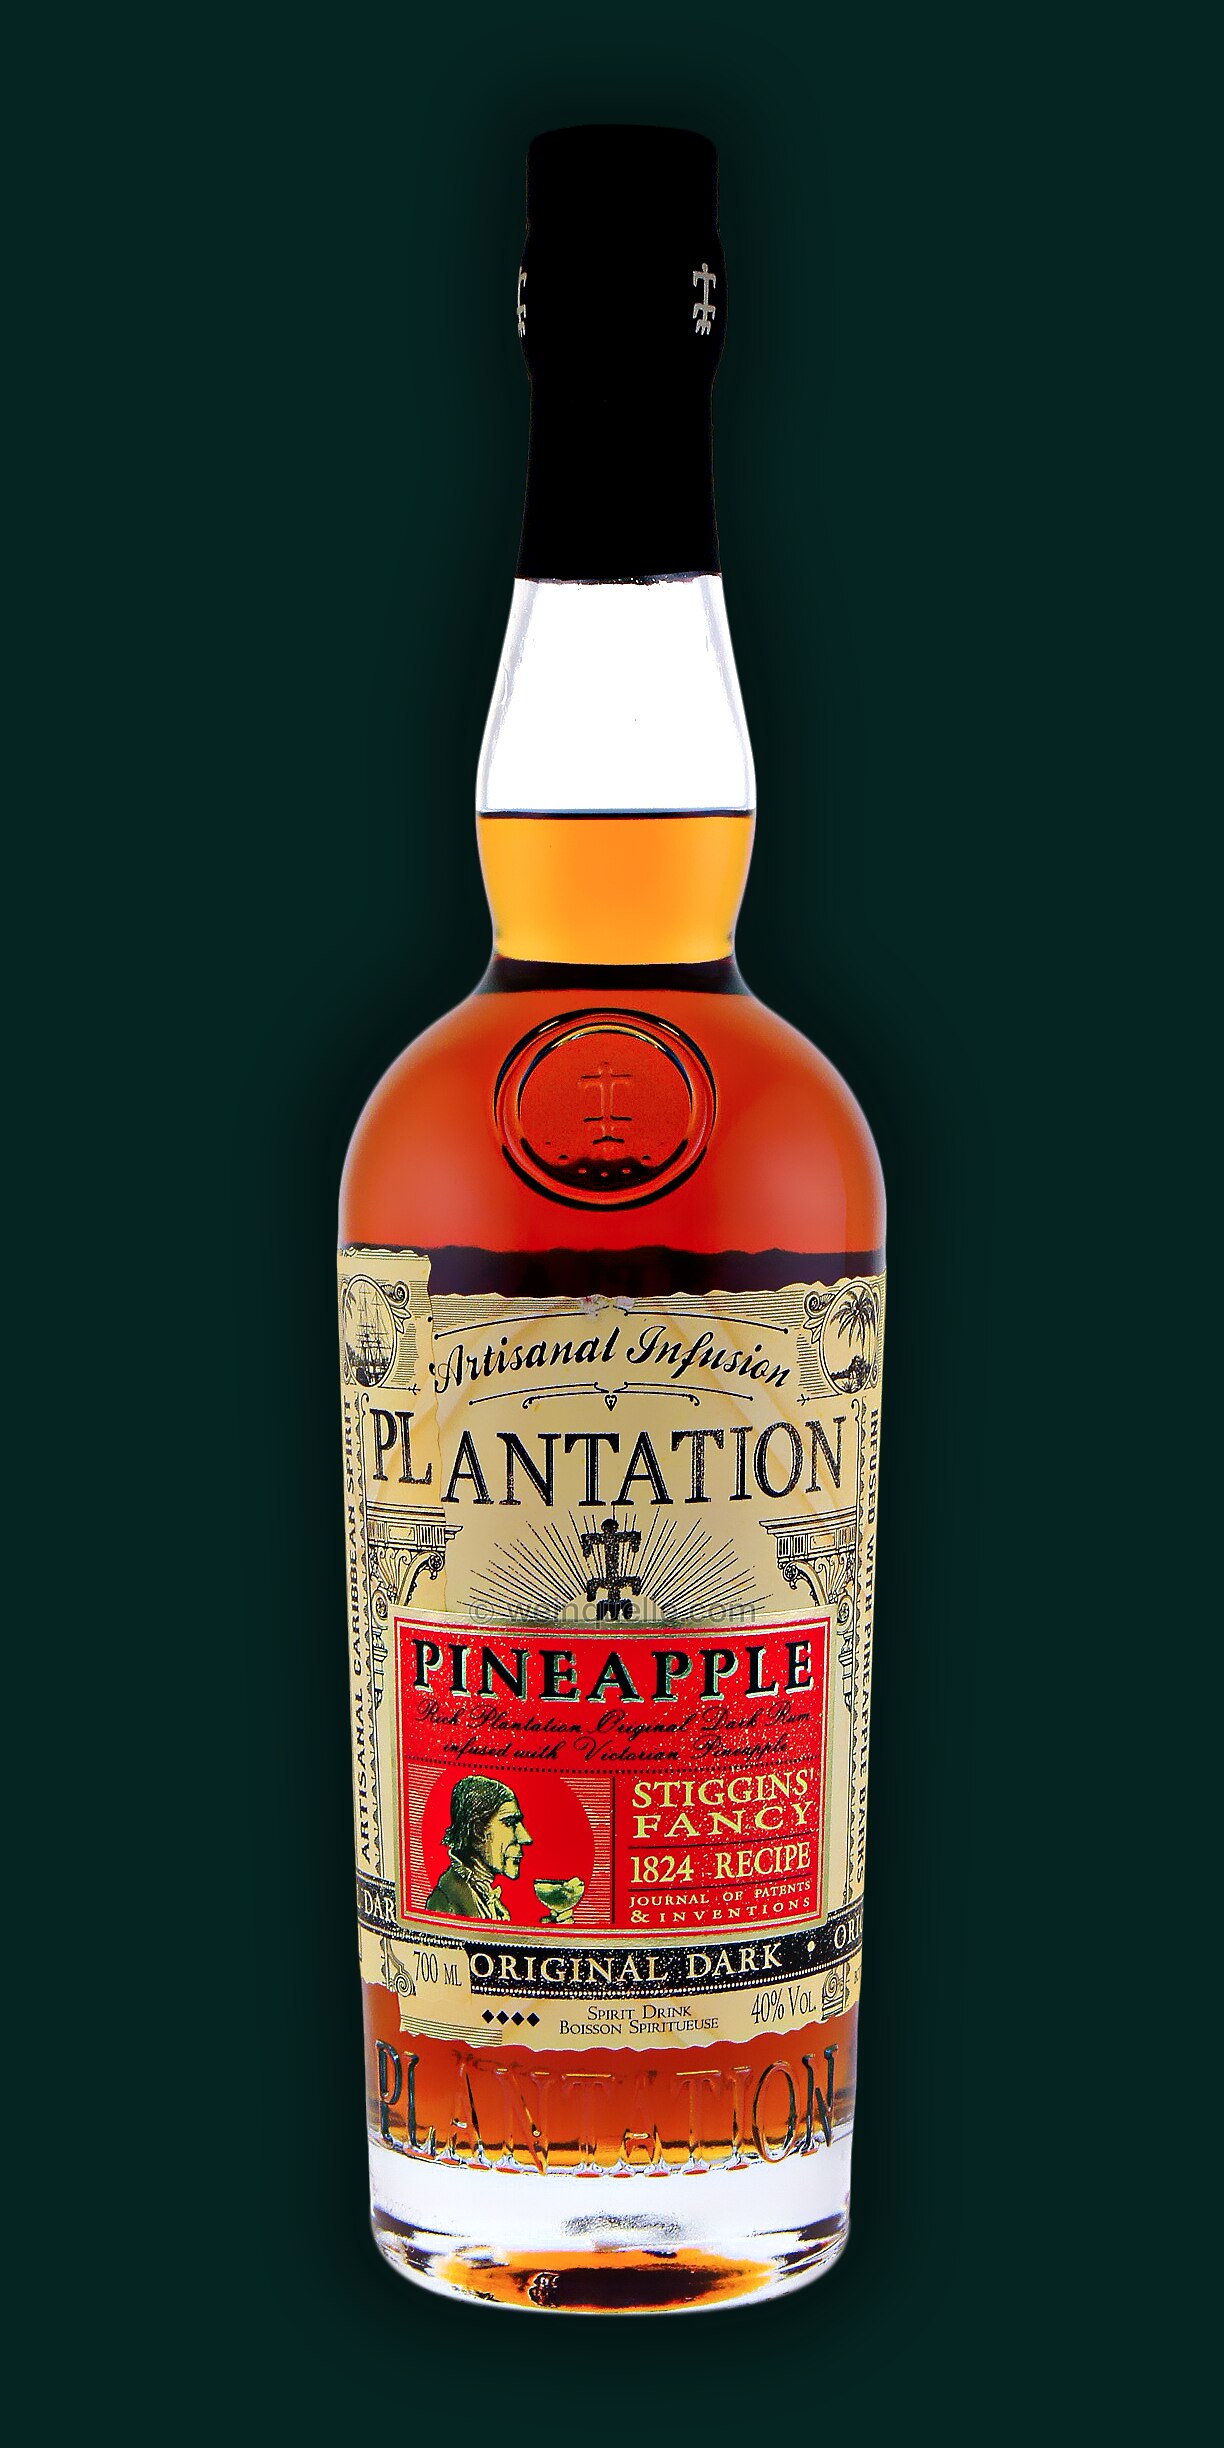 Plantation Pineapple Stiggins Fancy, 24,90 € - Weinquelle Lühmann